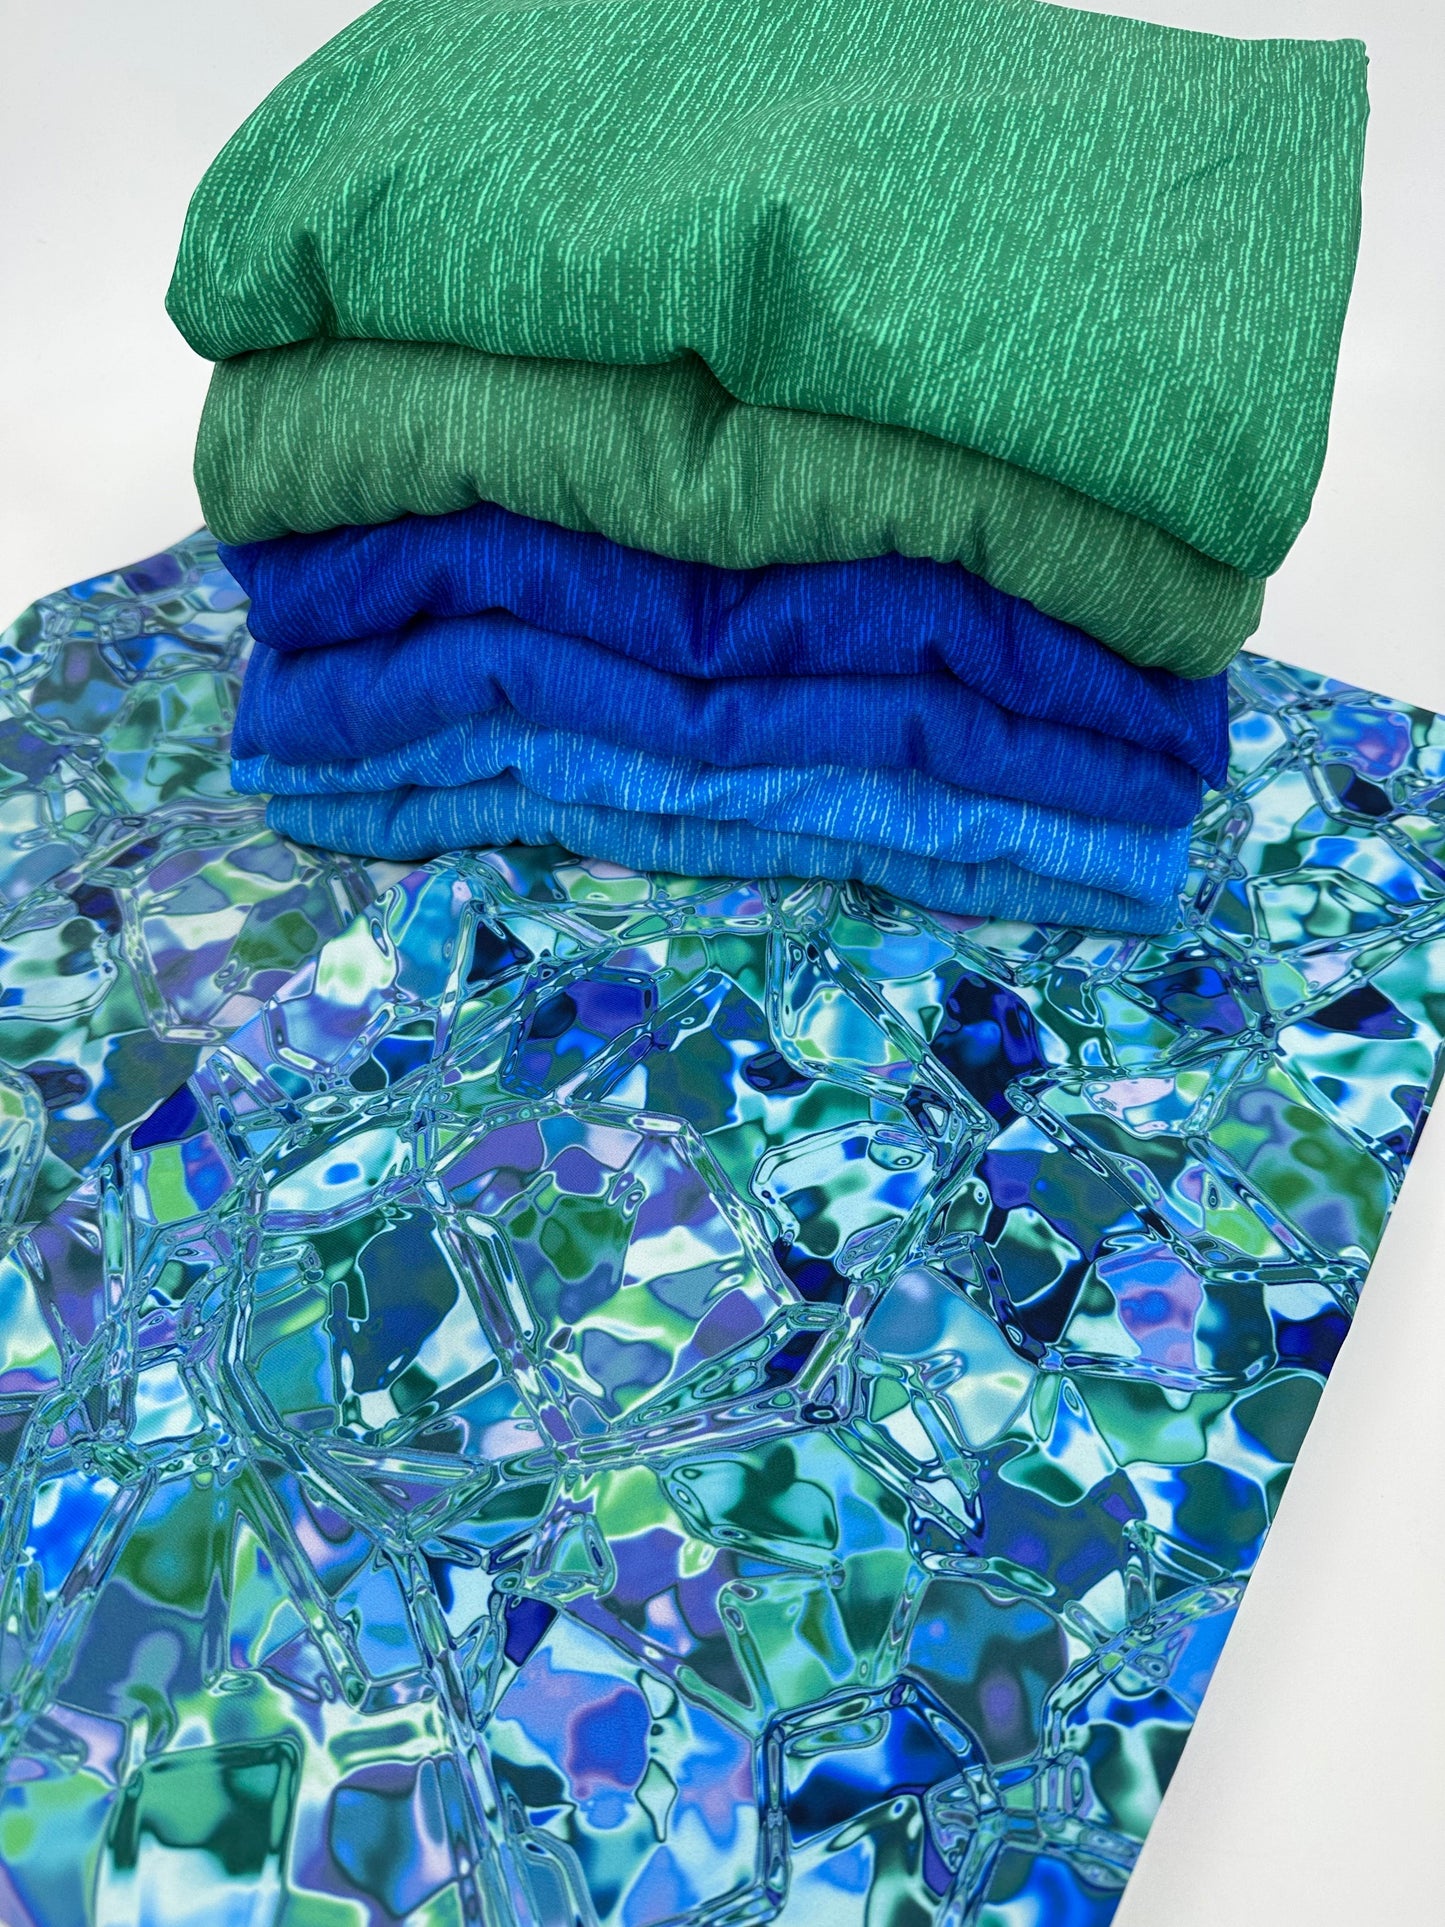 Sea Glass: Less Vibrant Coloring